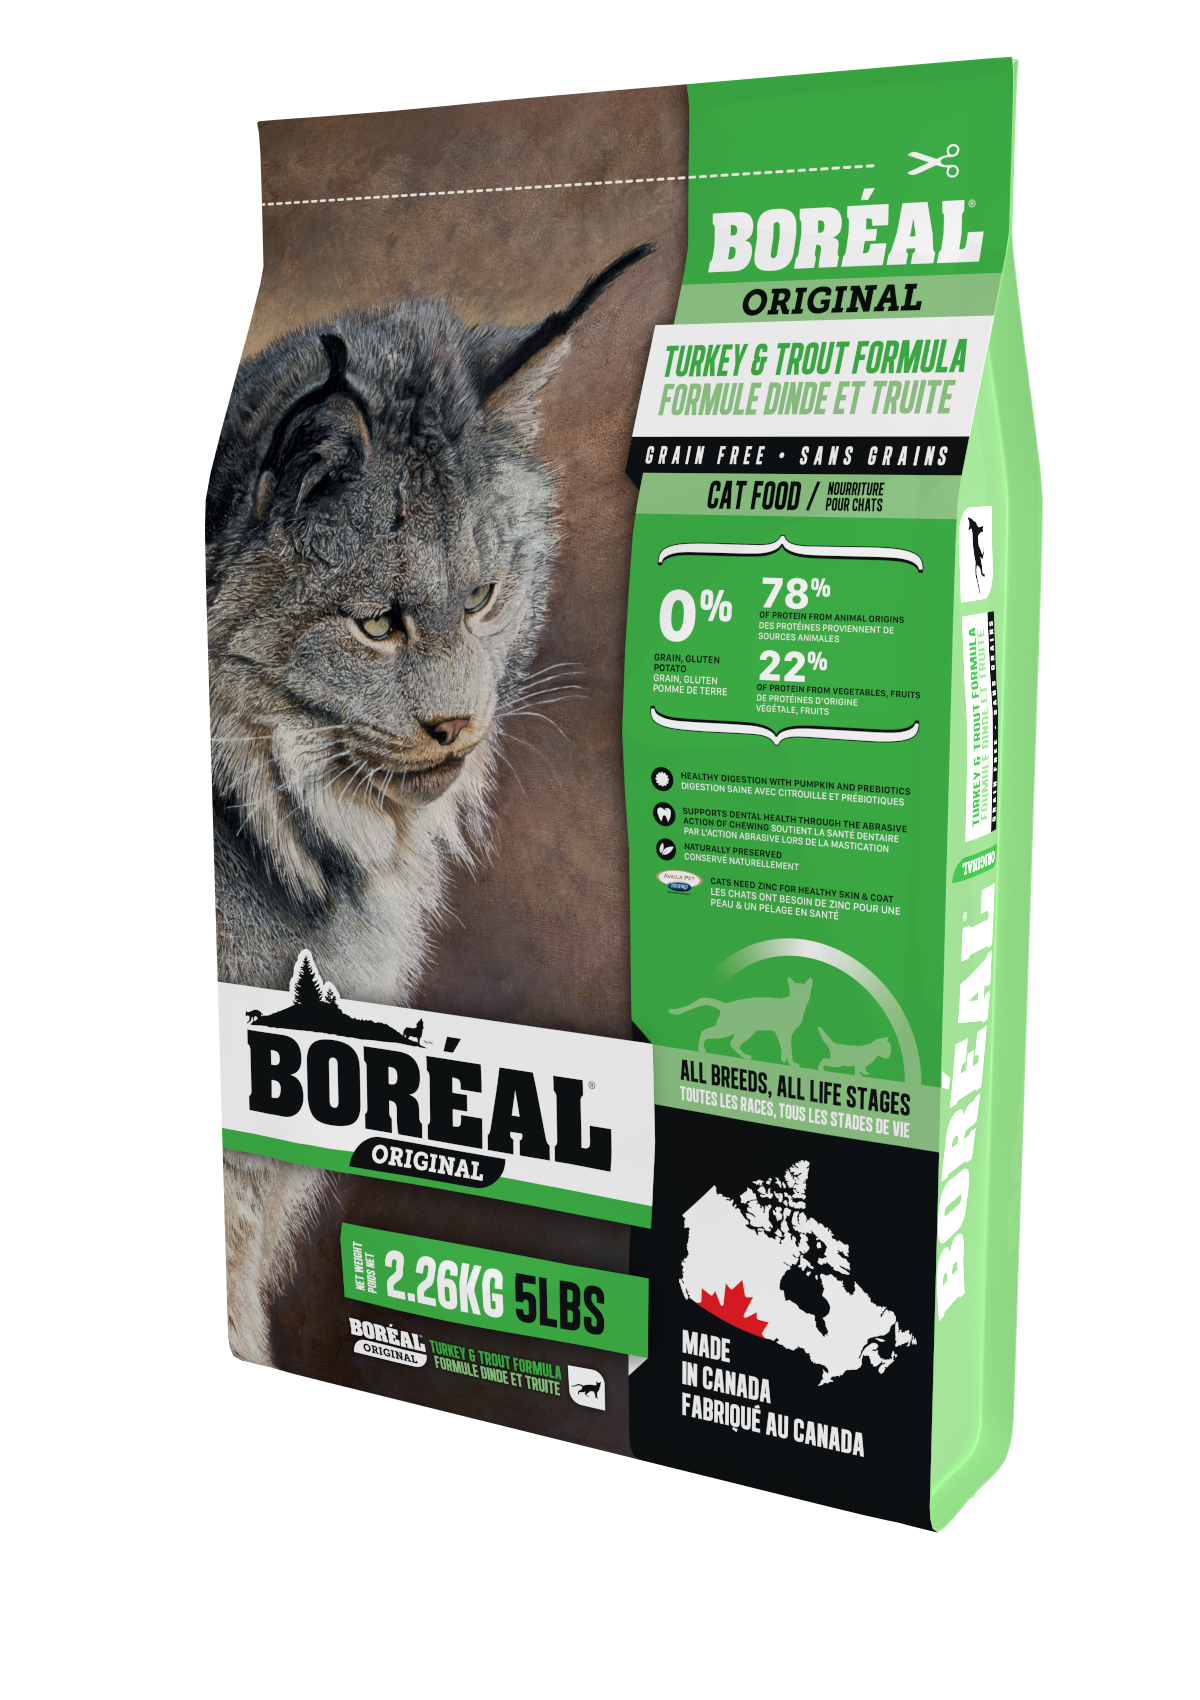 BOREAL Original Turkey & Trout Grain Free for cats 12 lbs.